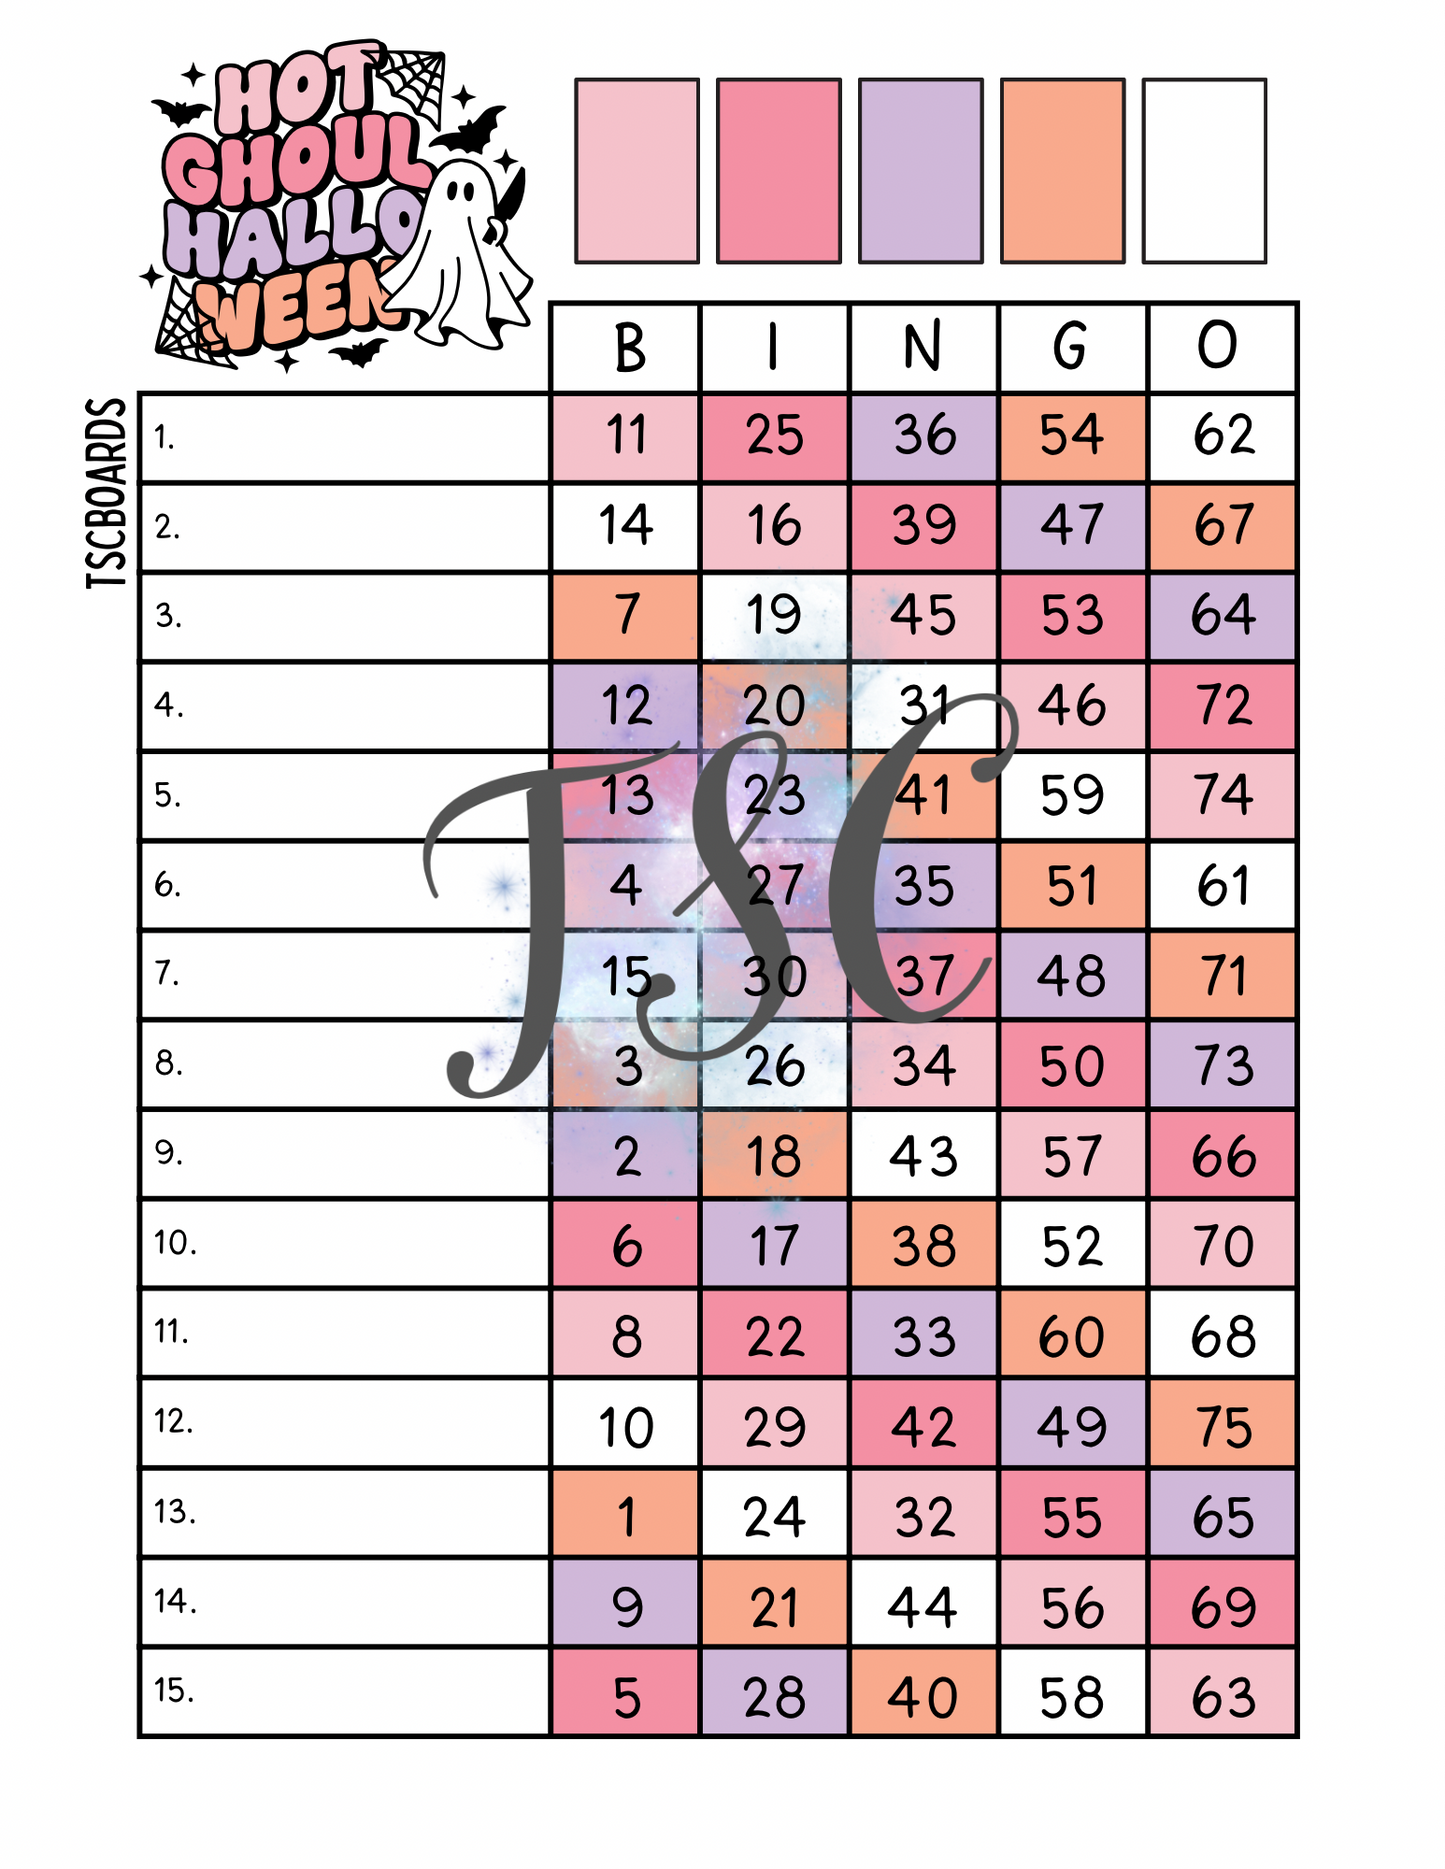 Hot Ghoul Halloween Bingo Board 1-75 Ball